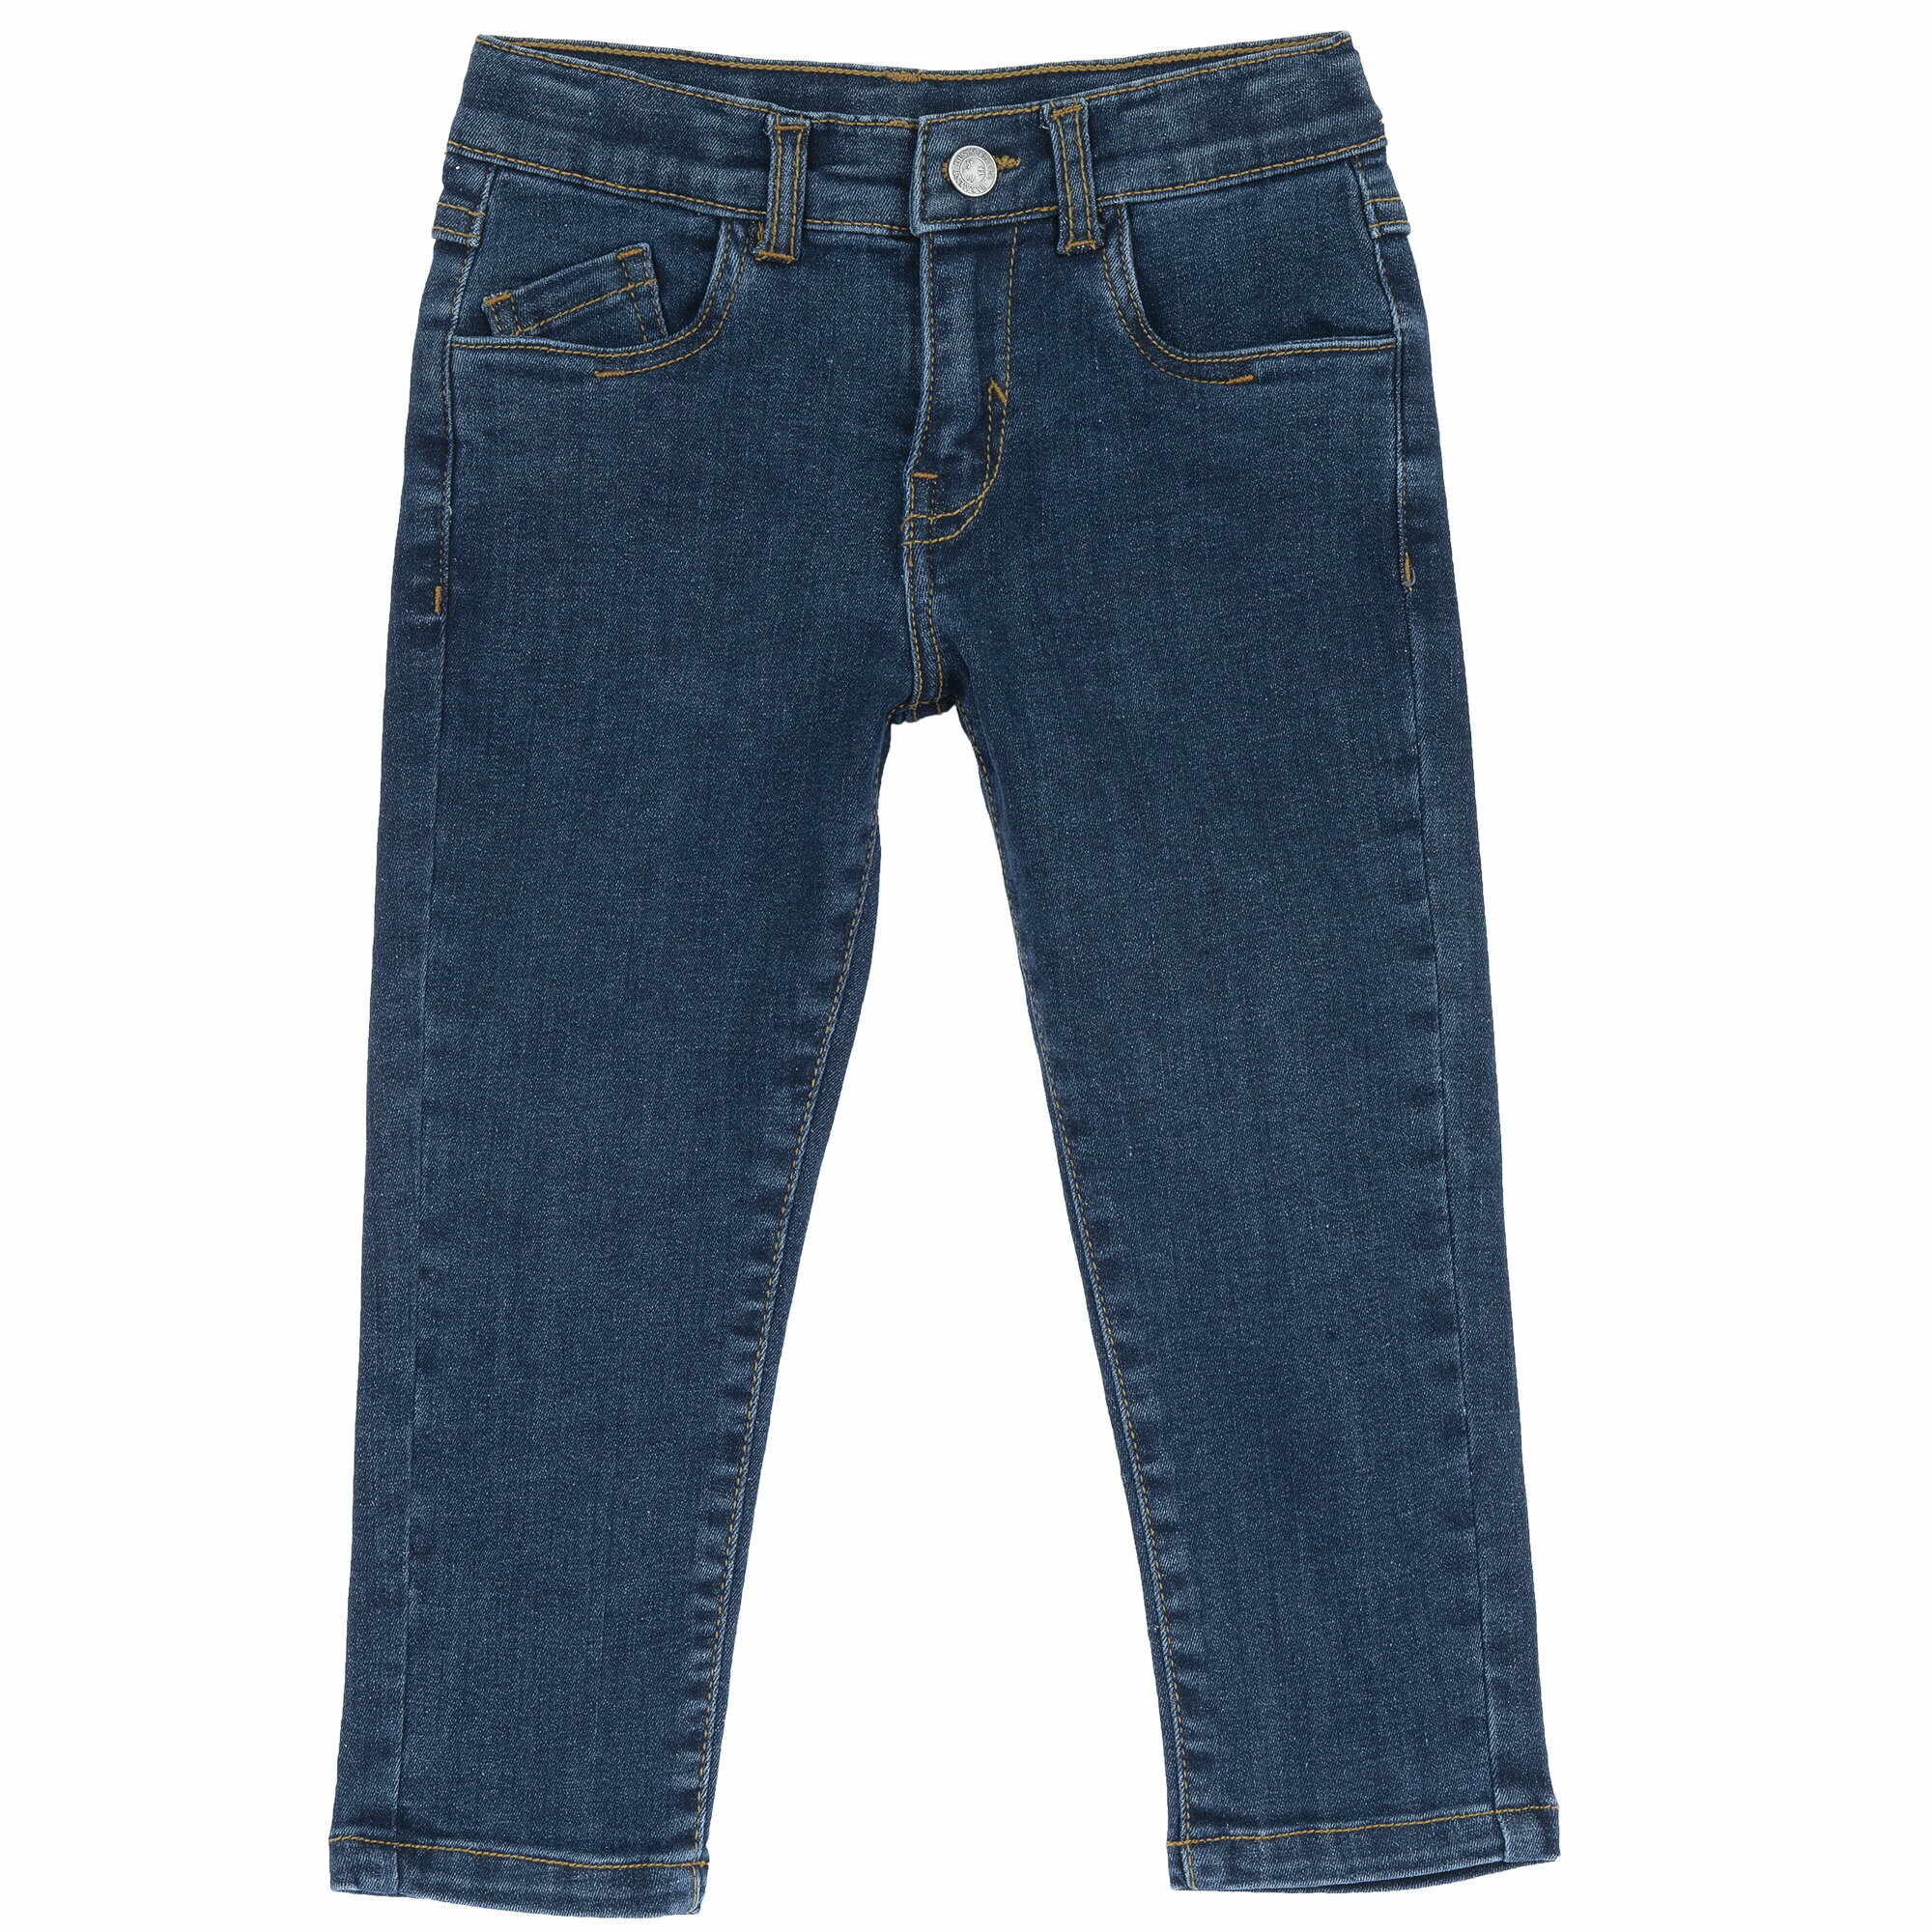 Pantaloni copii Chicco din denim stretch, Albastru Inchis, 05783-66MC